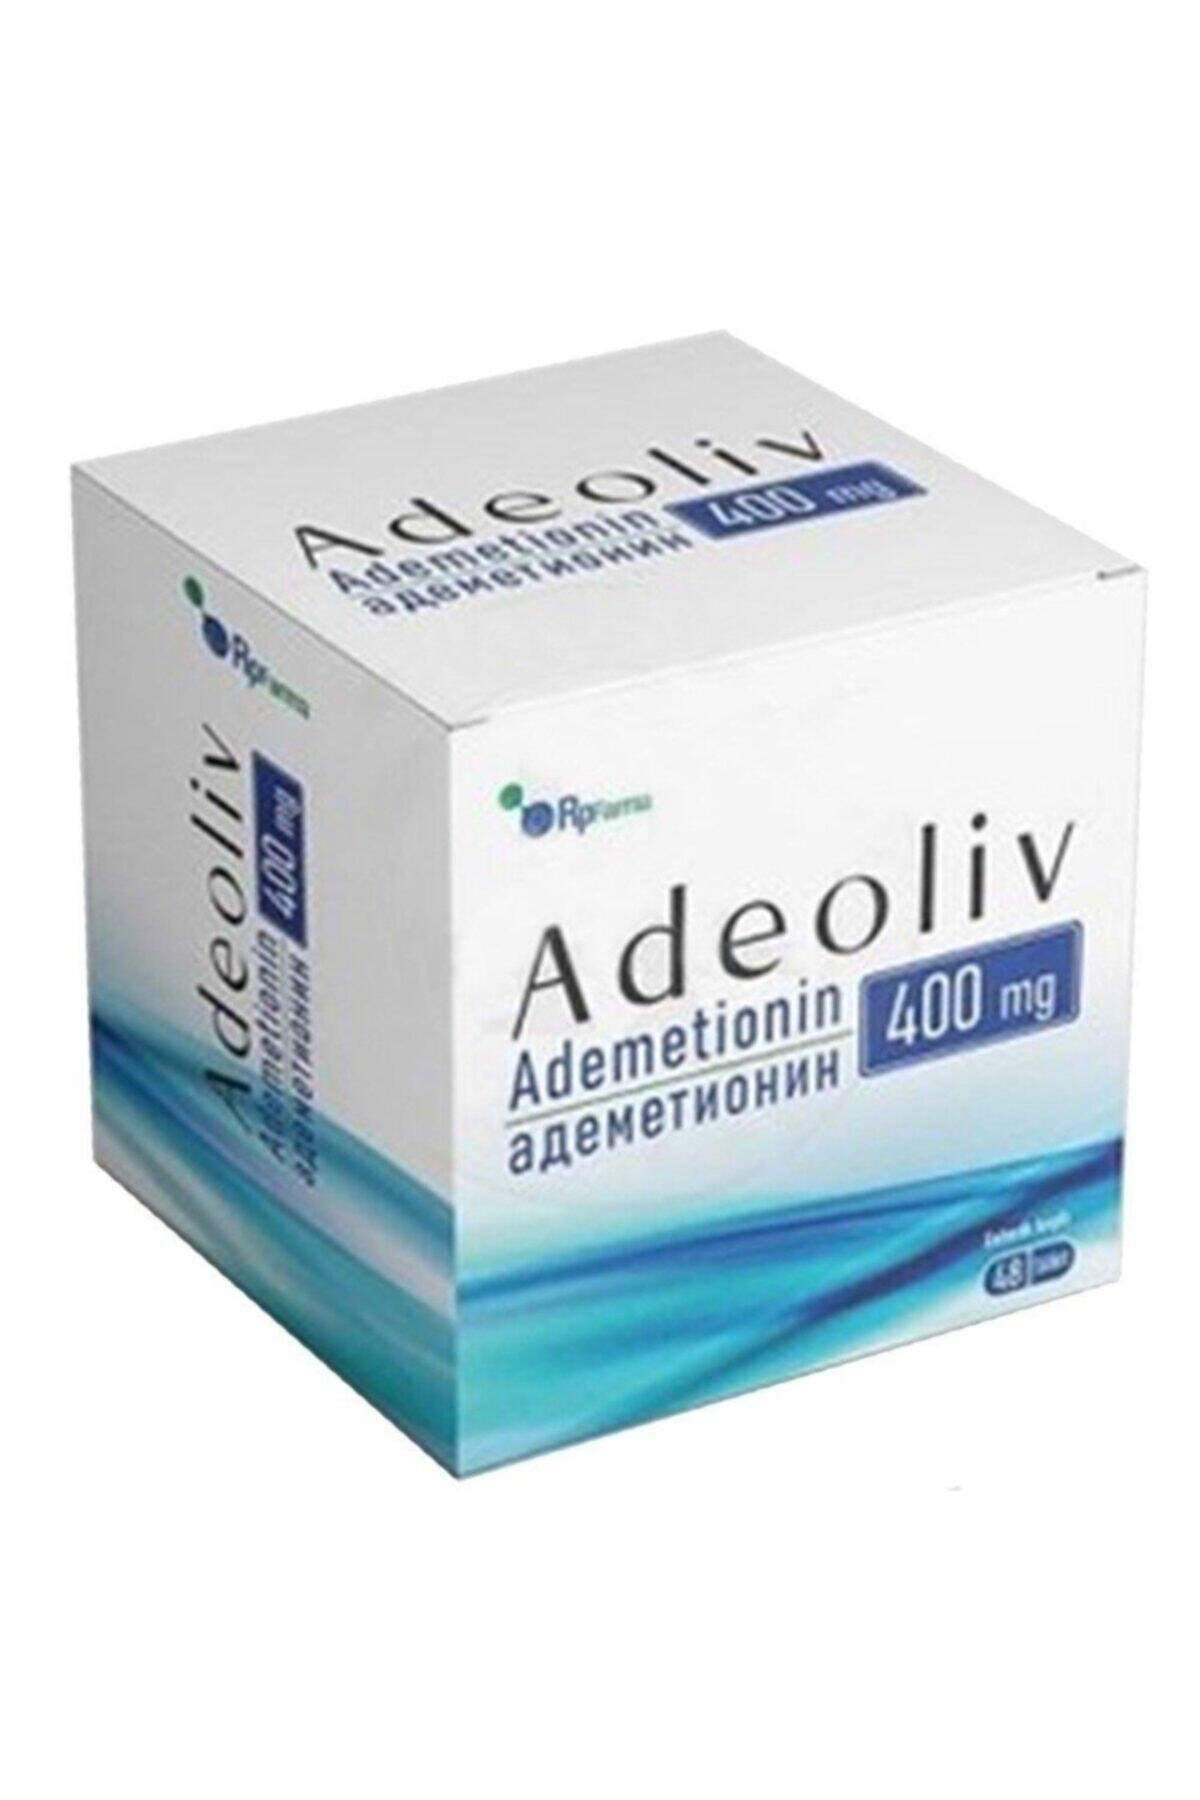 Rp Farma Adeoliv 400mg (ademetionin) 48 Tablet